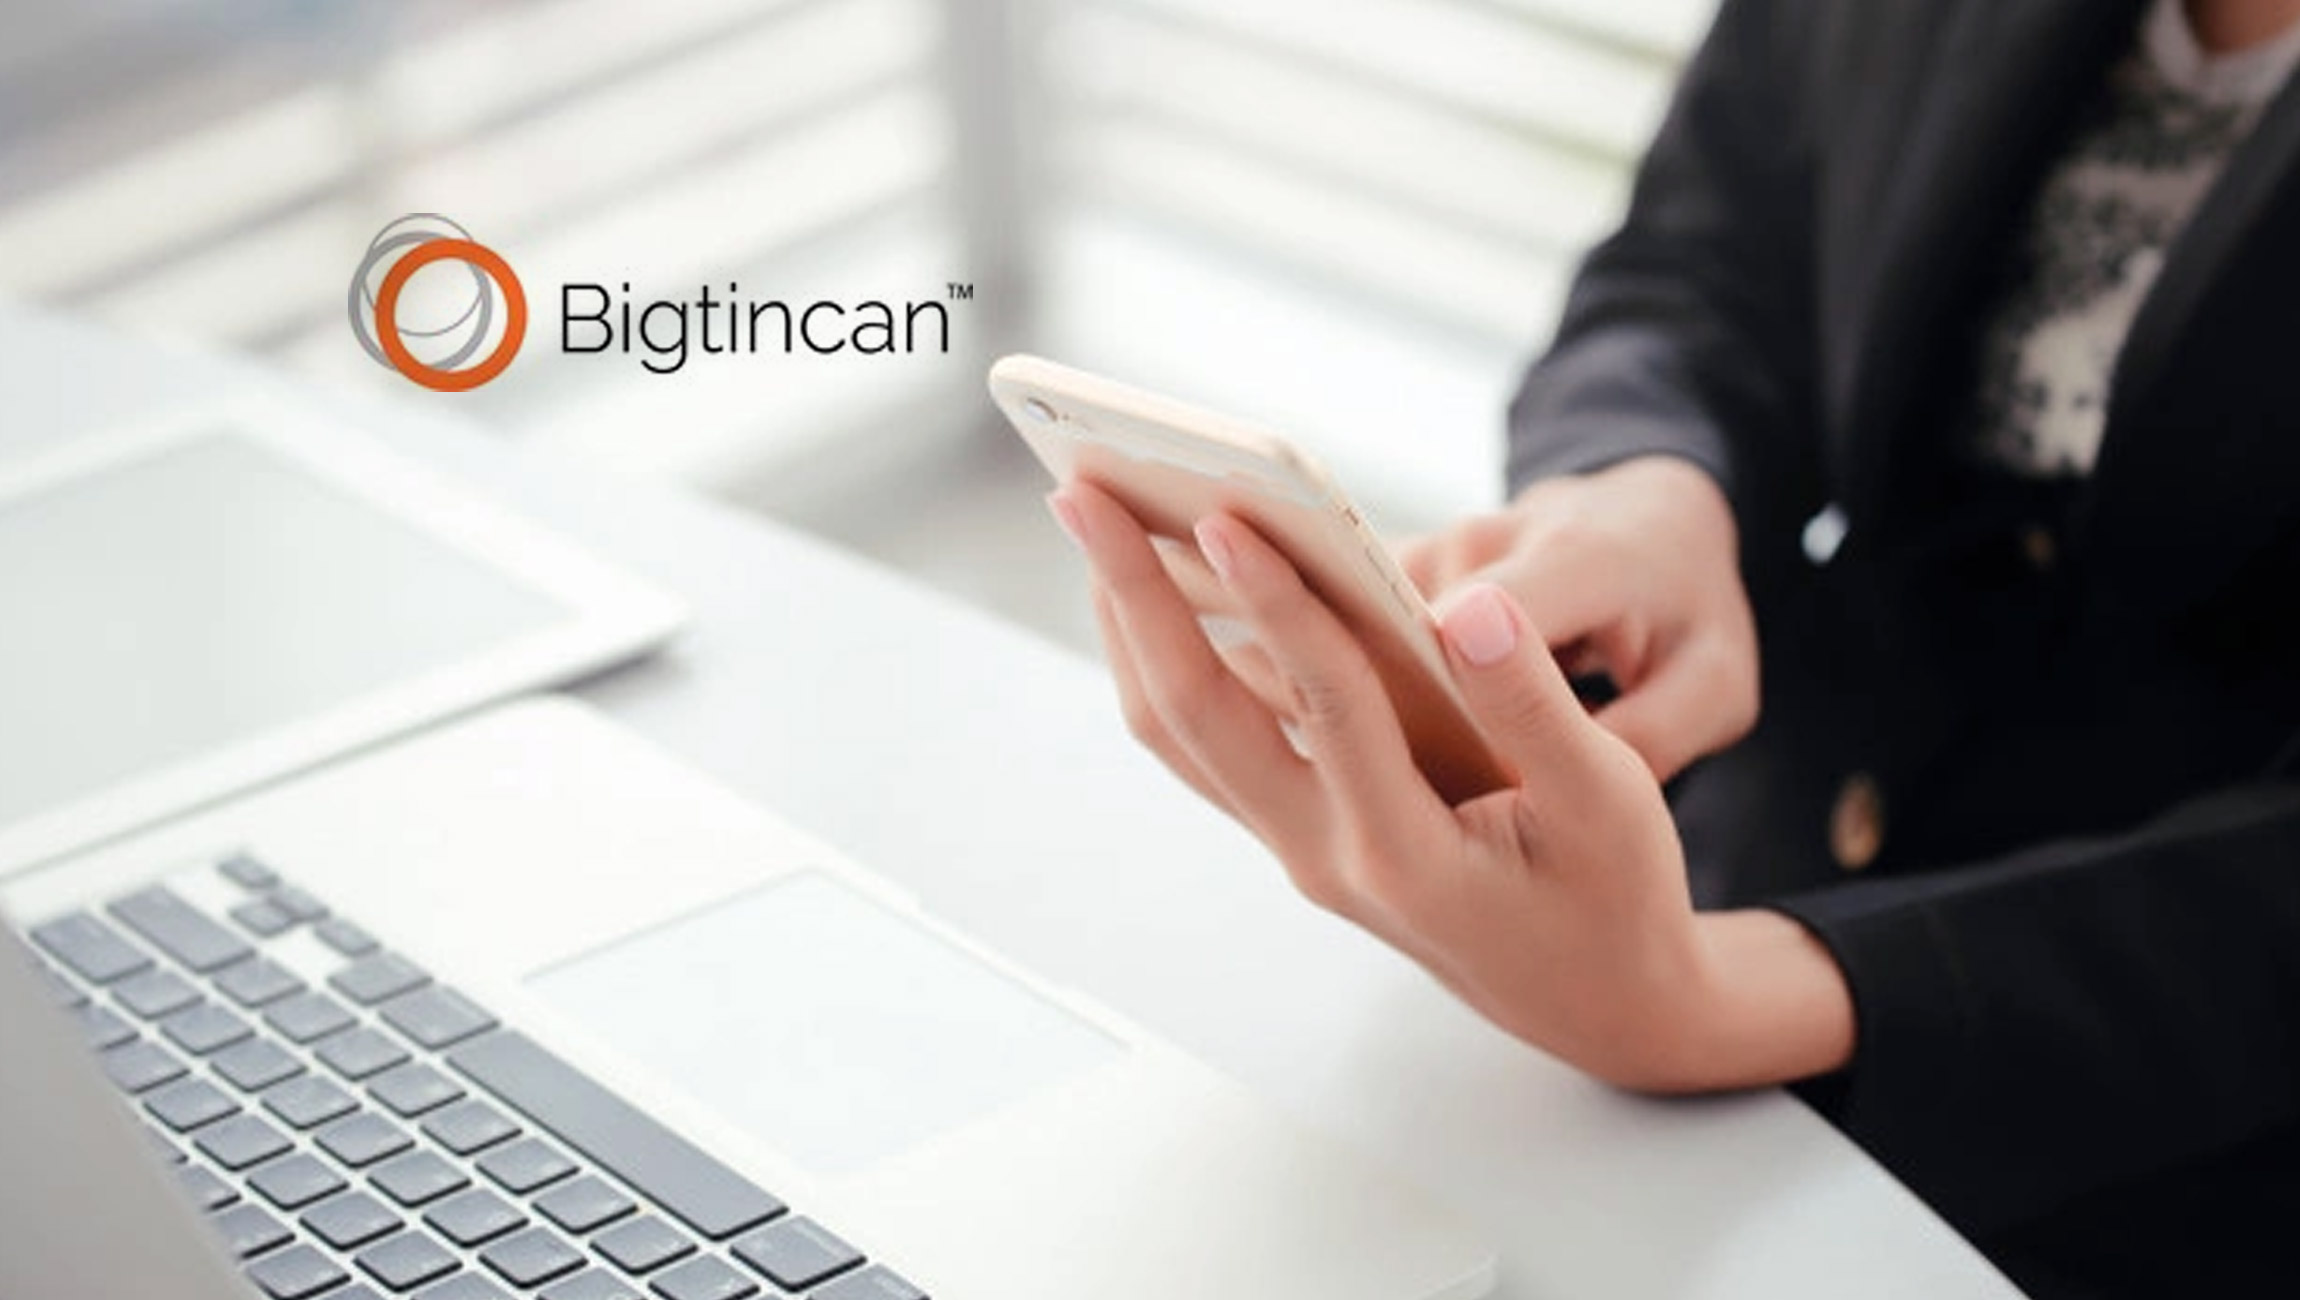 Bigtincan Launches Sales Enablement App for macOS